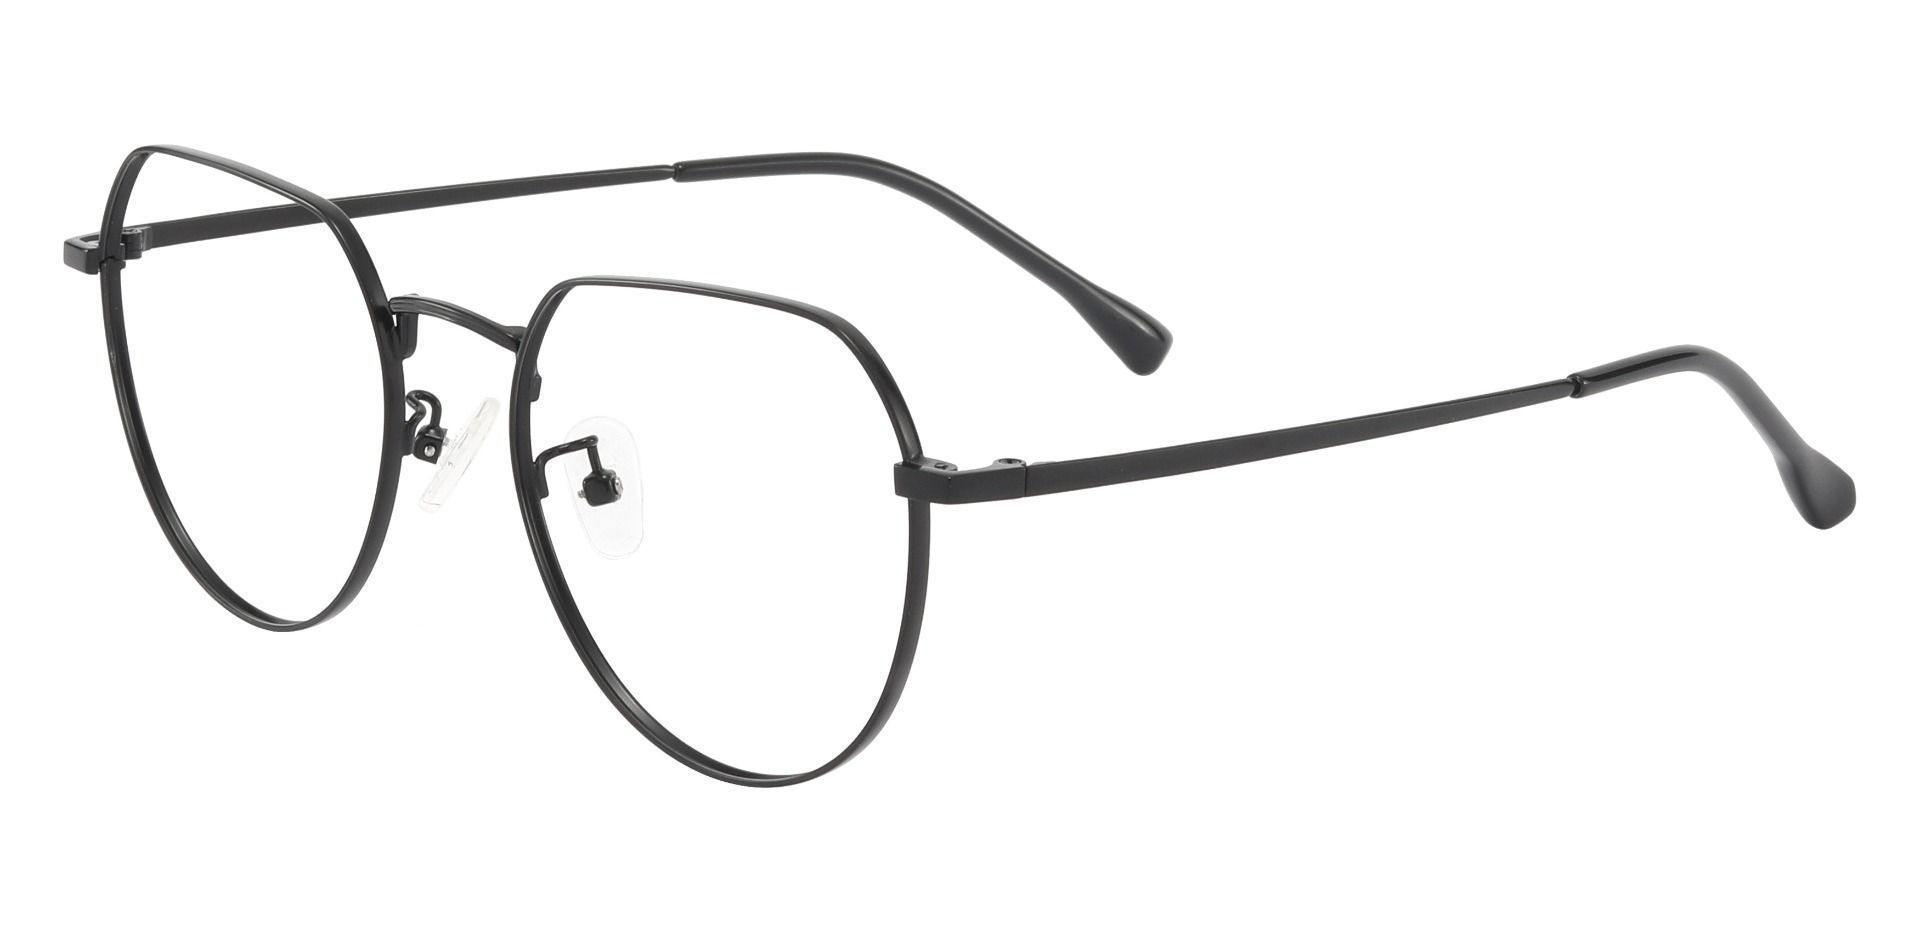 Rapid Geometric Lined Bifocal Glasses - Black